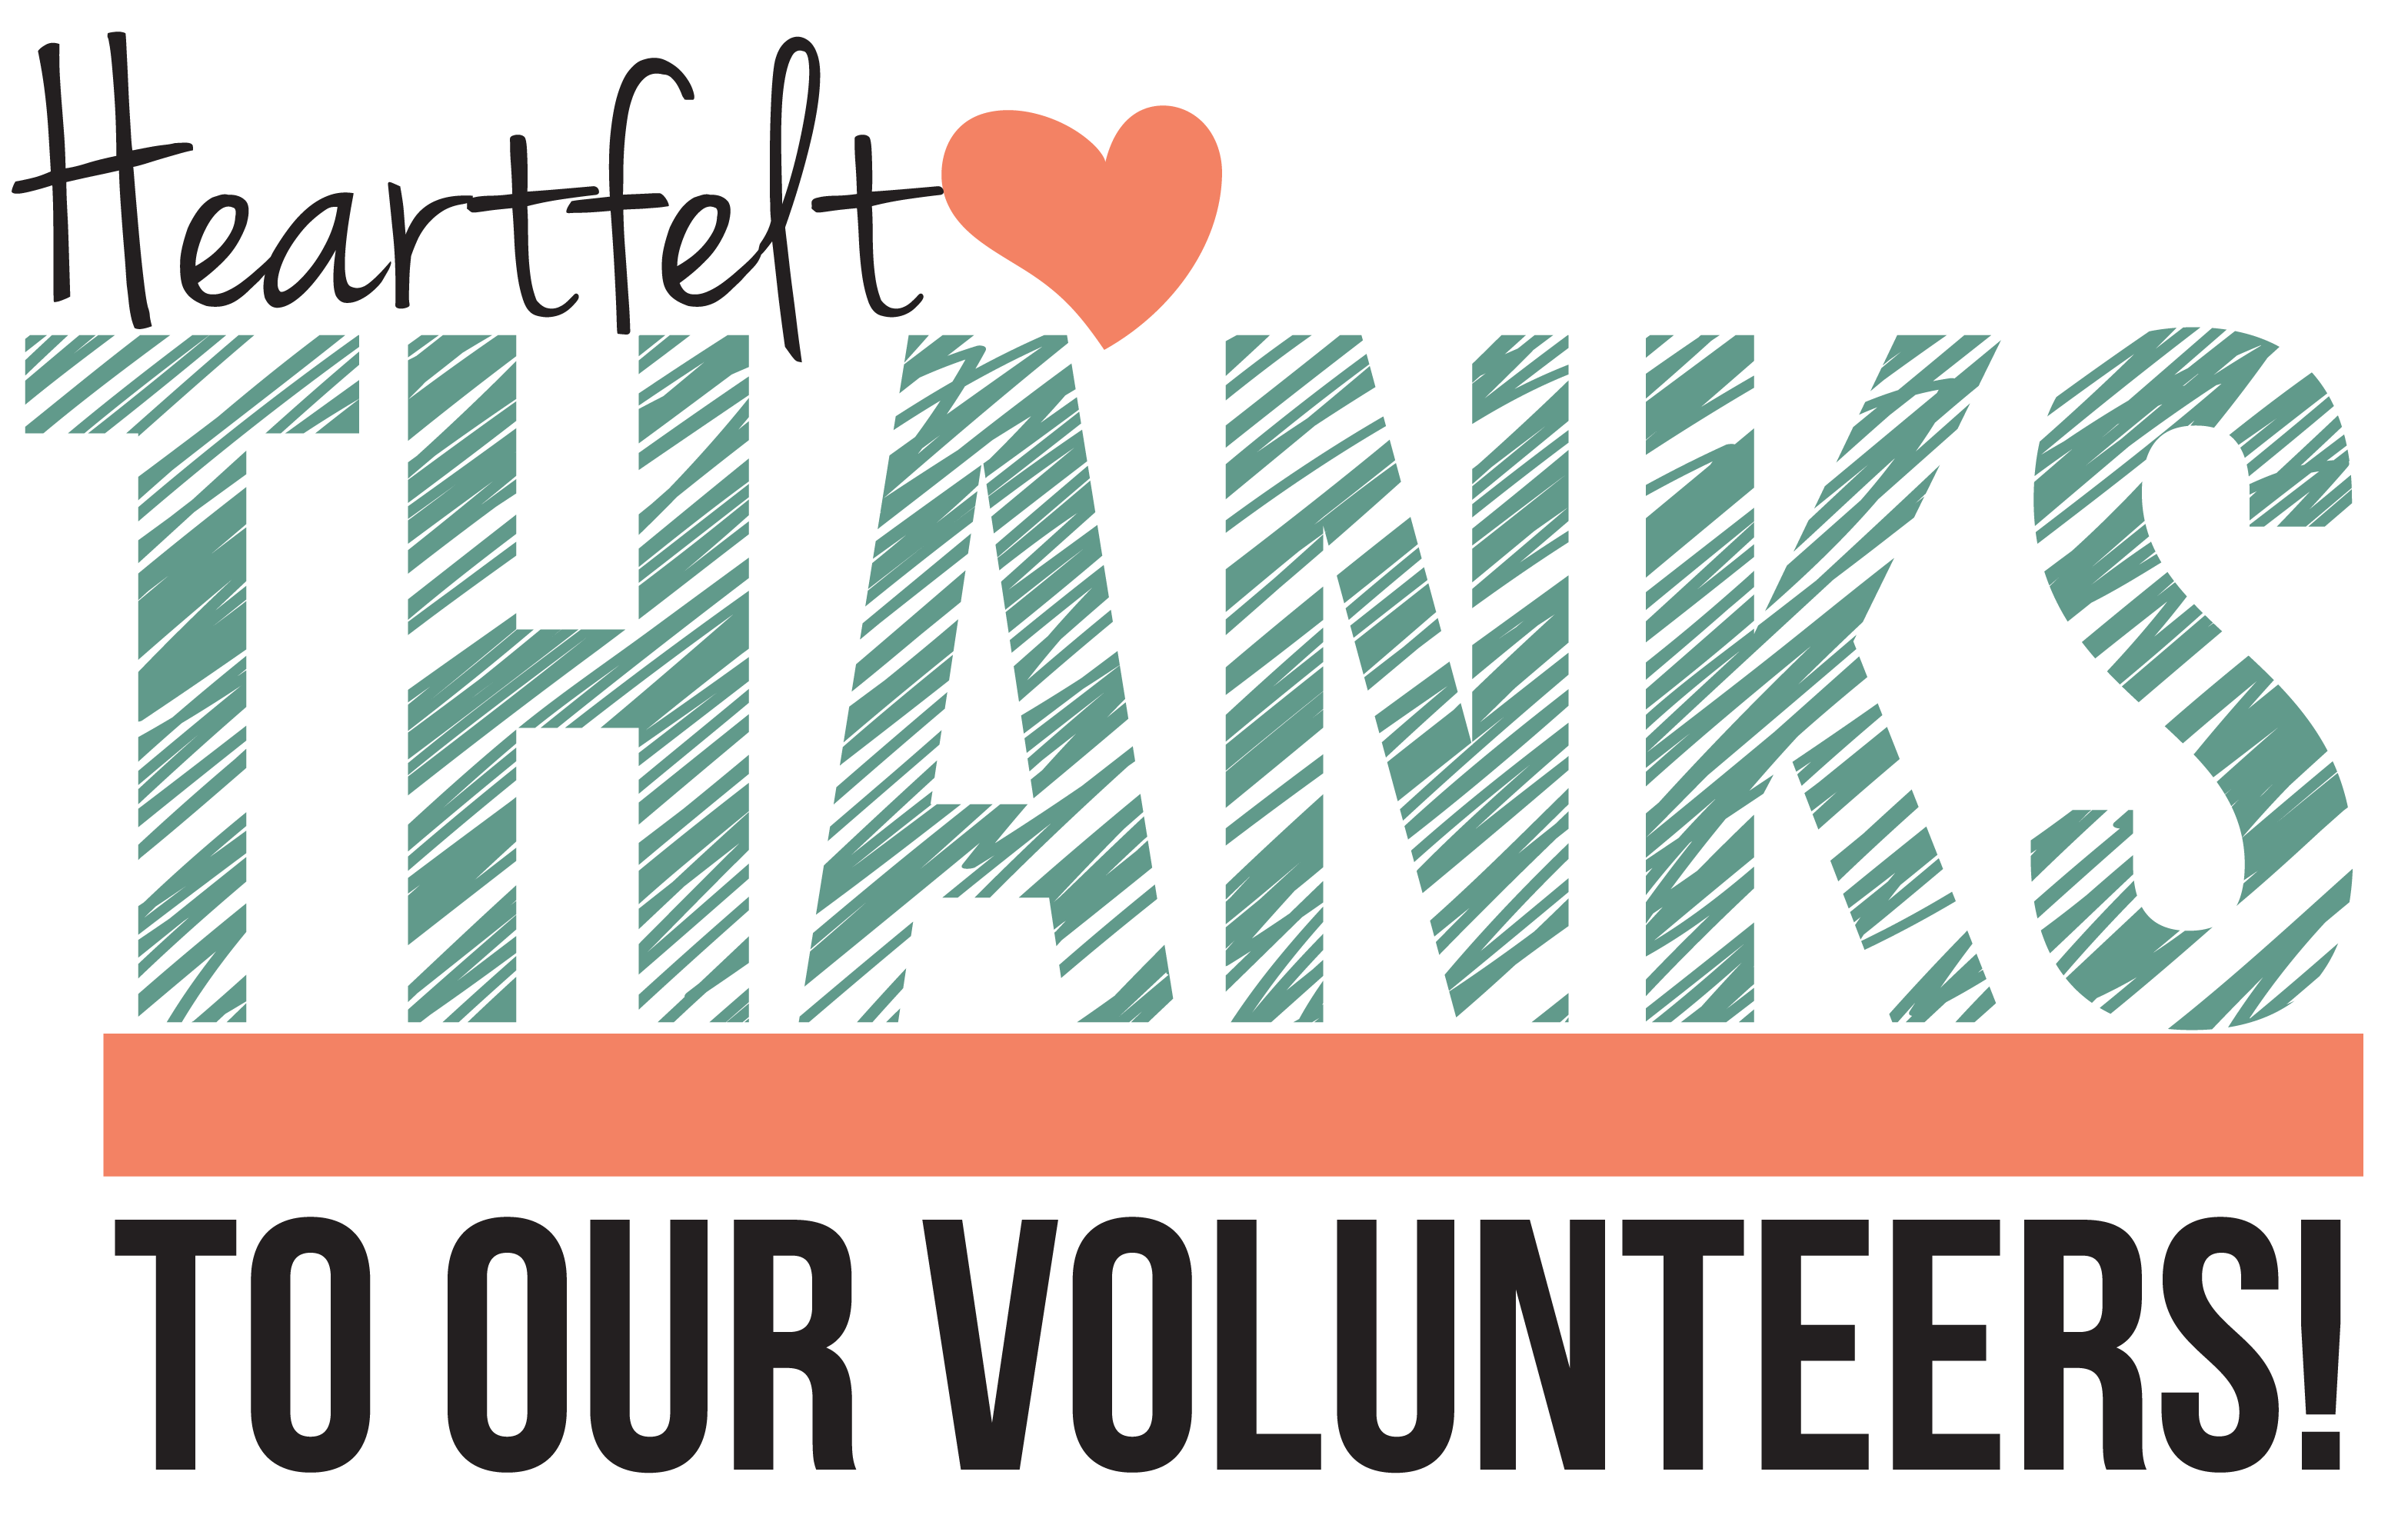 Heartfelt Thanks to our Volunteers